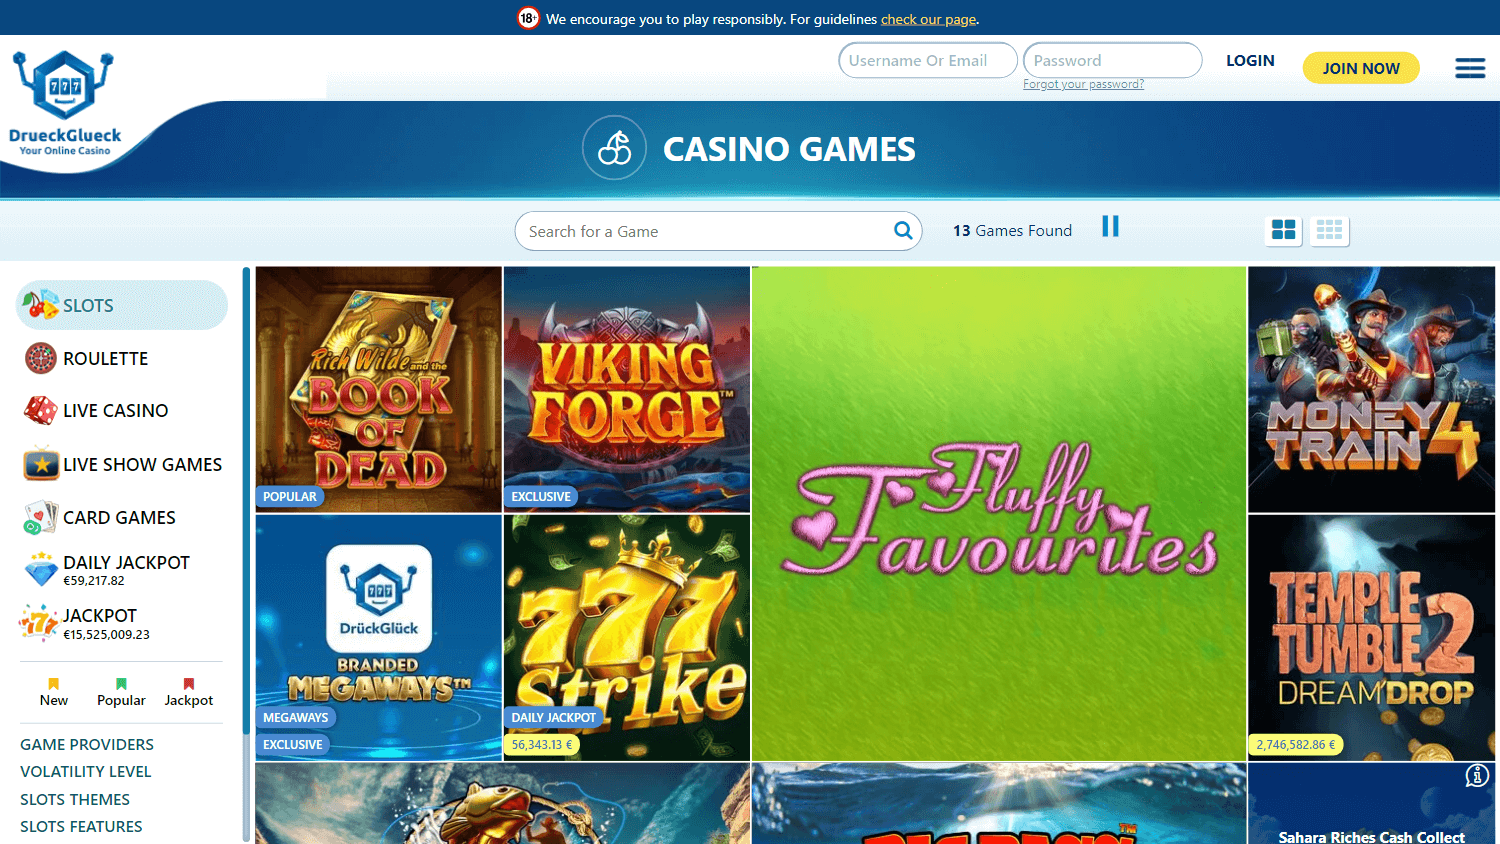 drueckglueck_casino_game_gallery_desktop